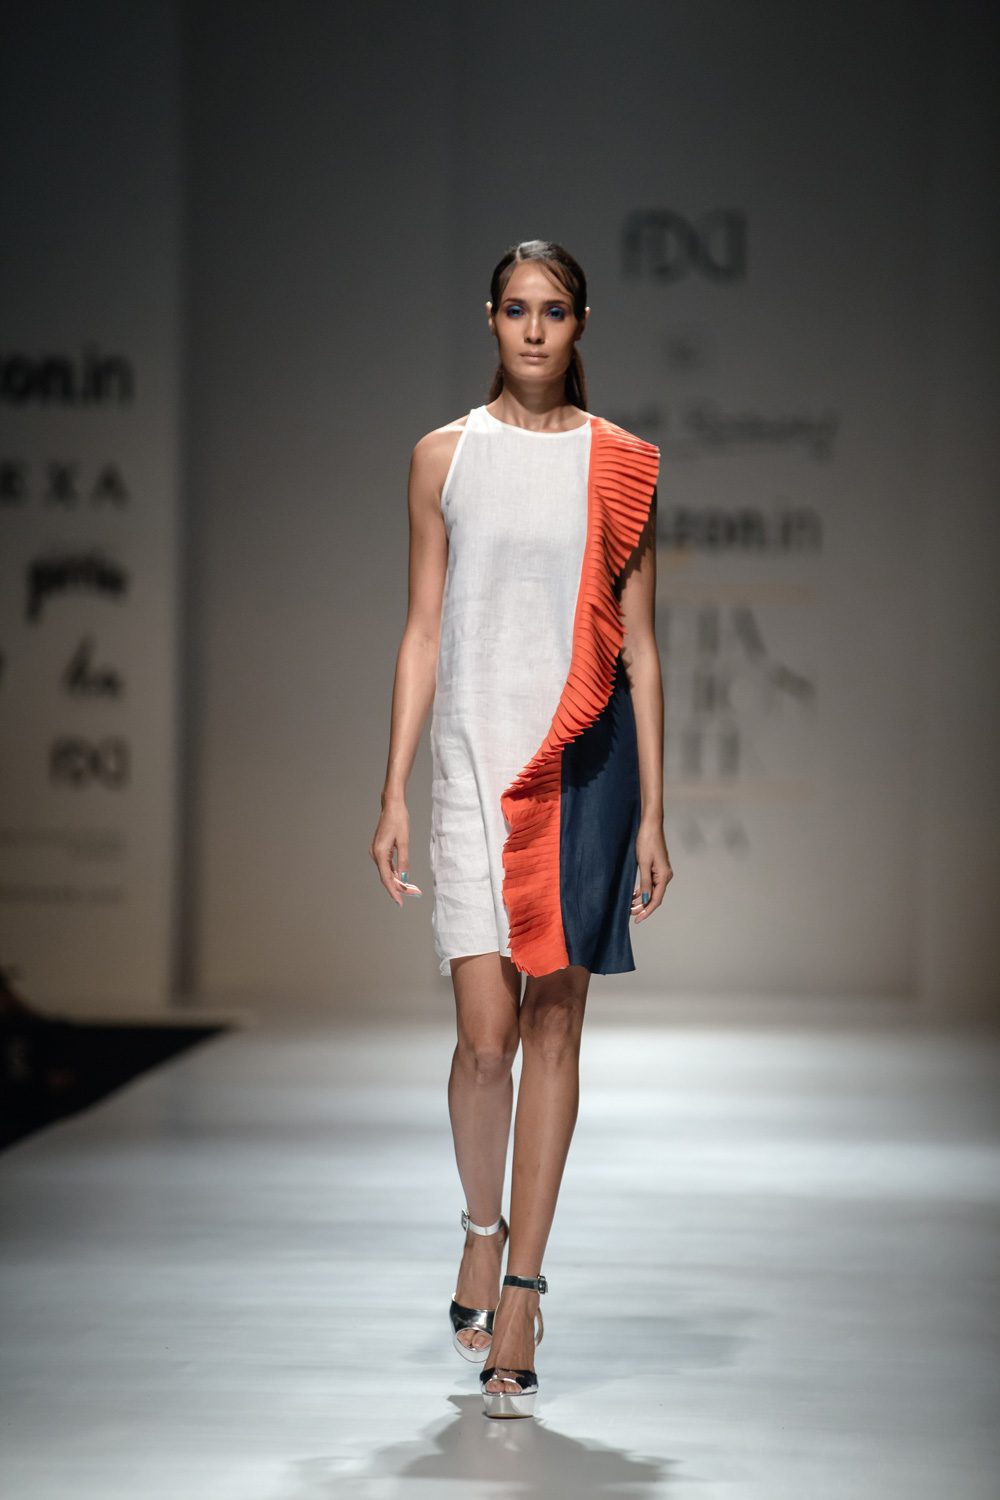 Wendell Rodricks FDCI Amazon India Fashion Week Spring Summer 2018 Look 1